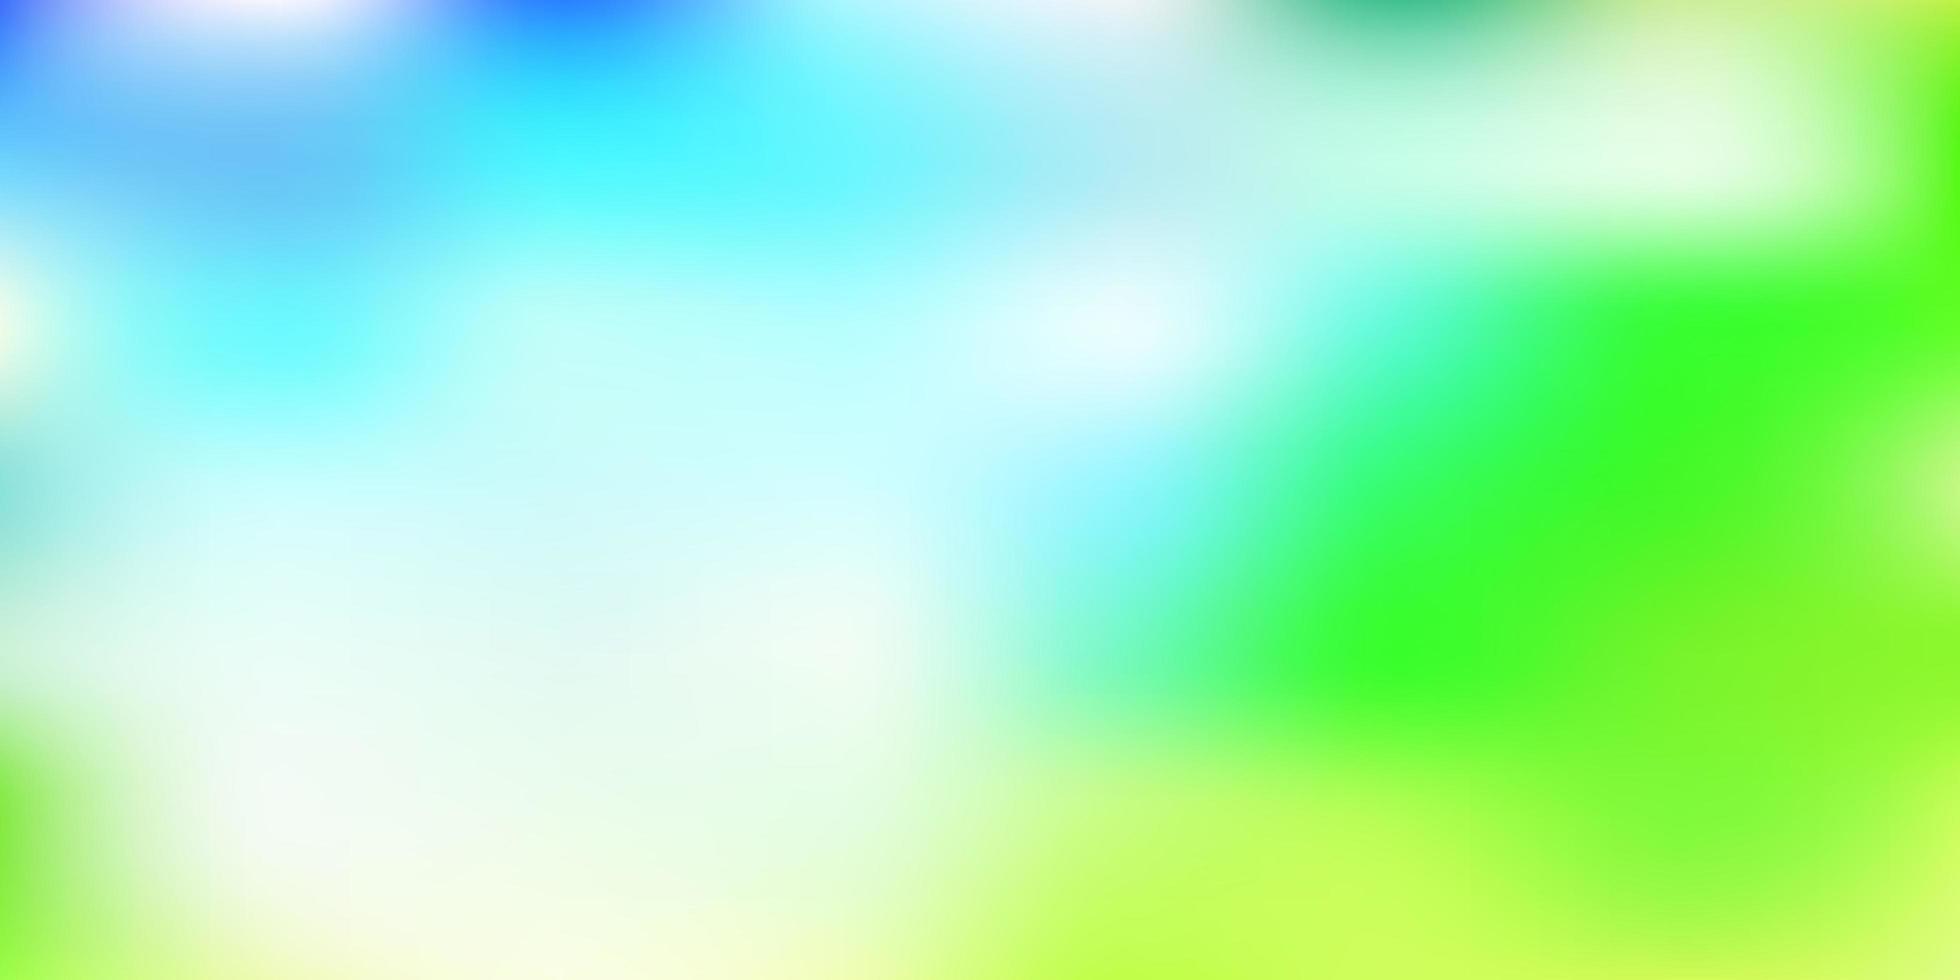 Plantilla de desenfoque degradado de vector azul claro, verde.